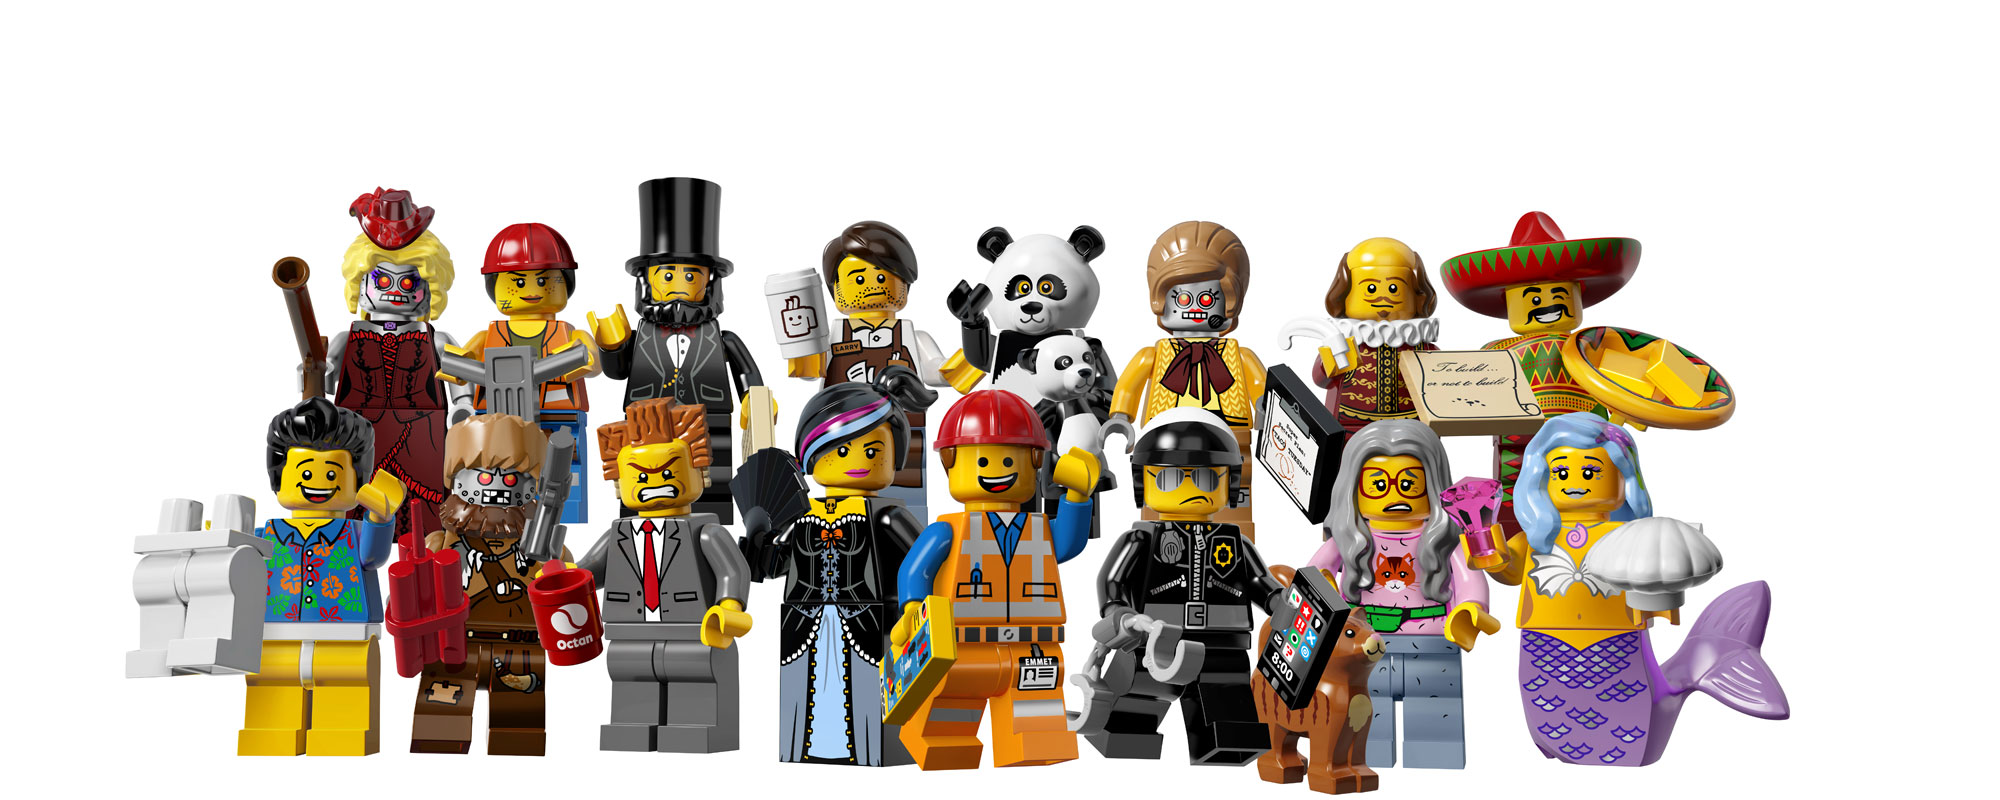 LEGO-Movies-Series-12-Minifigures-71004-1